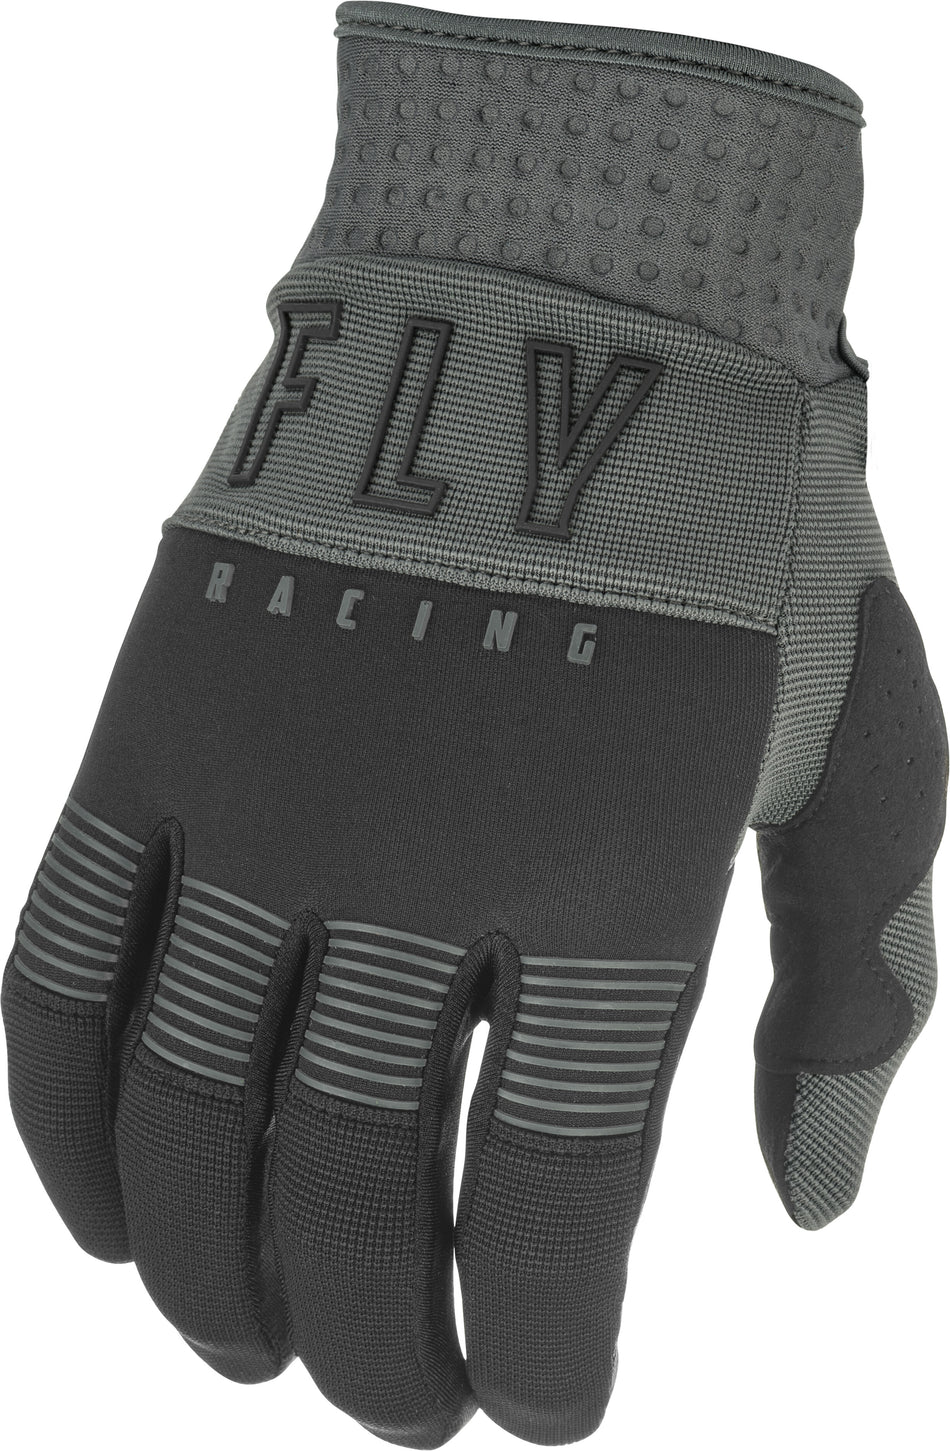 FLY RACING F-16 Gloves Black/Grey Sz 11 374-91011